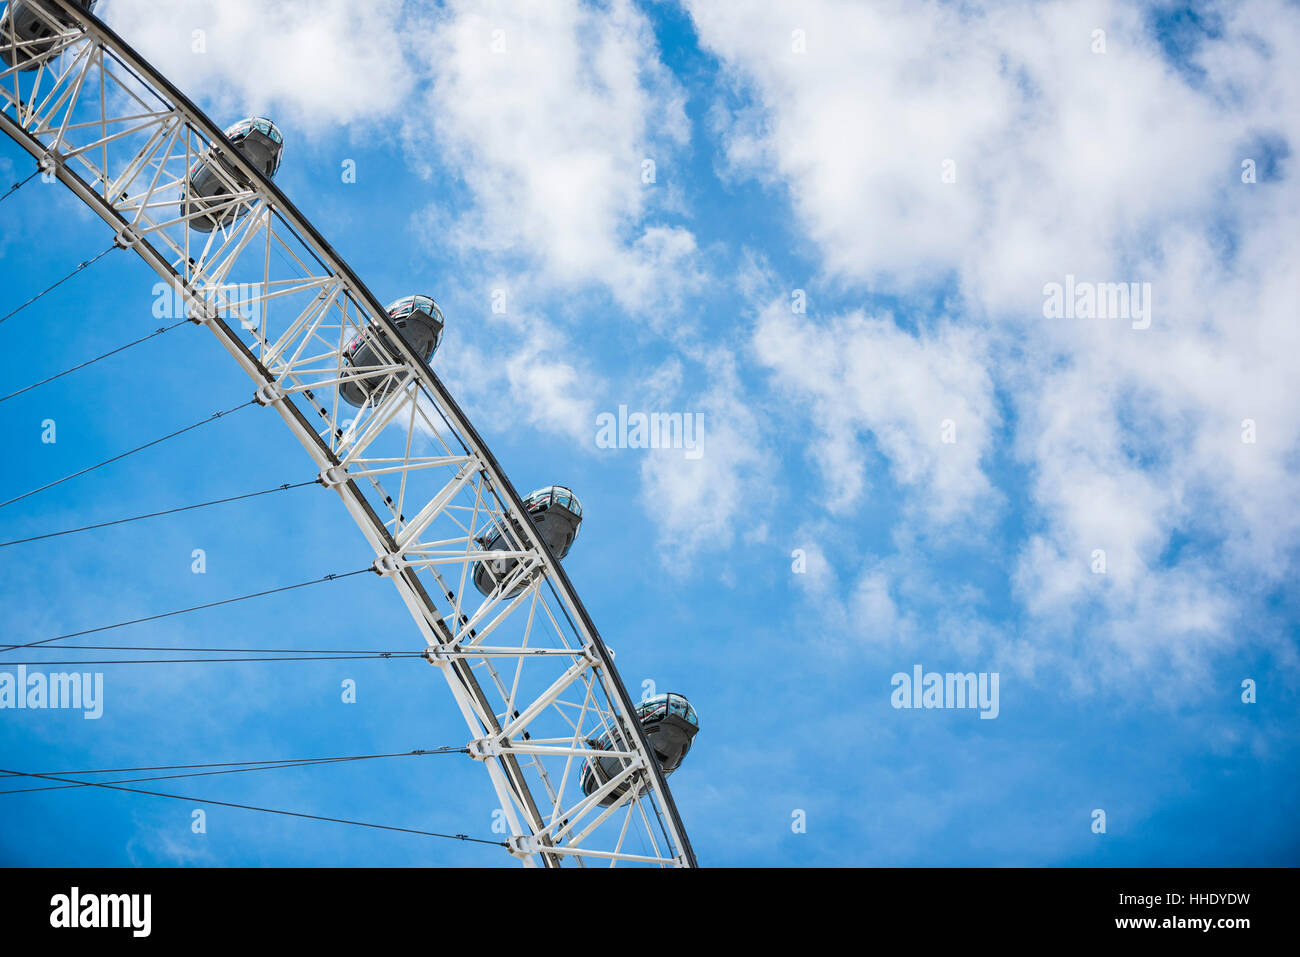 London Eye (Millennium Wheel), London Borough of Lambeth, London, UK Stockfoto